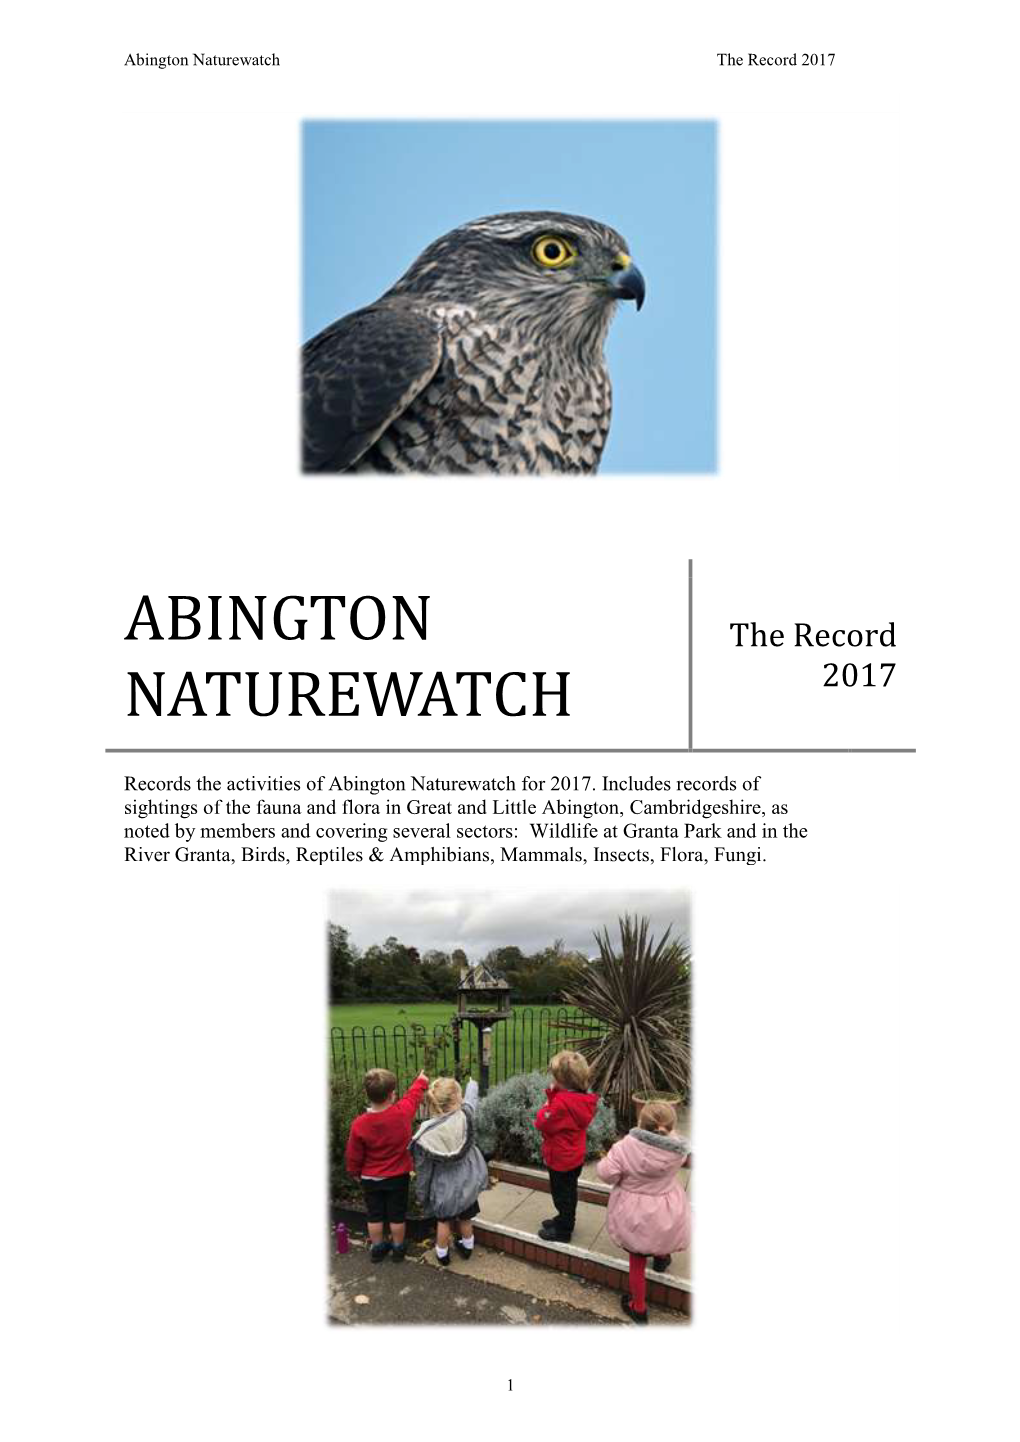 Abington Naturewatch the Record 2017